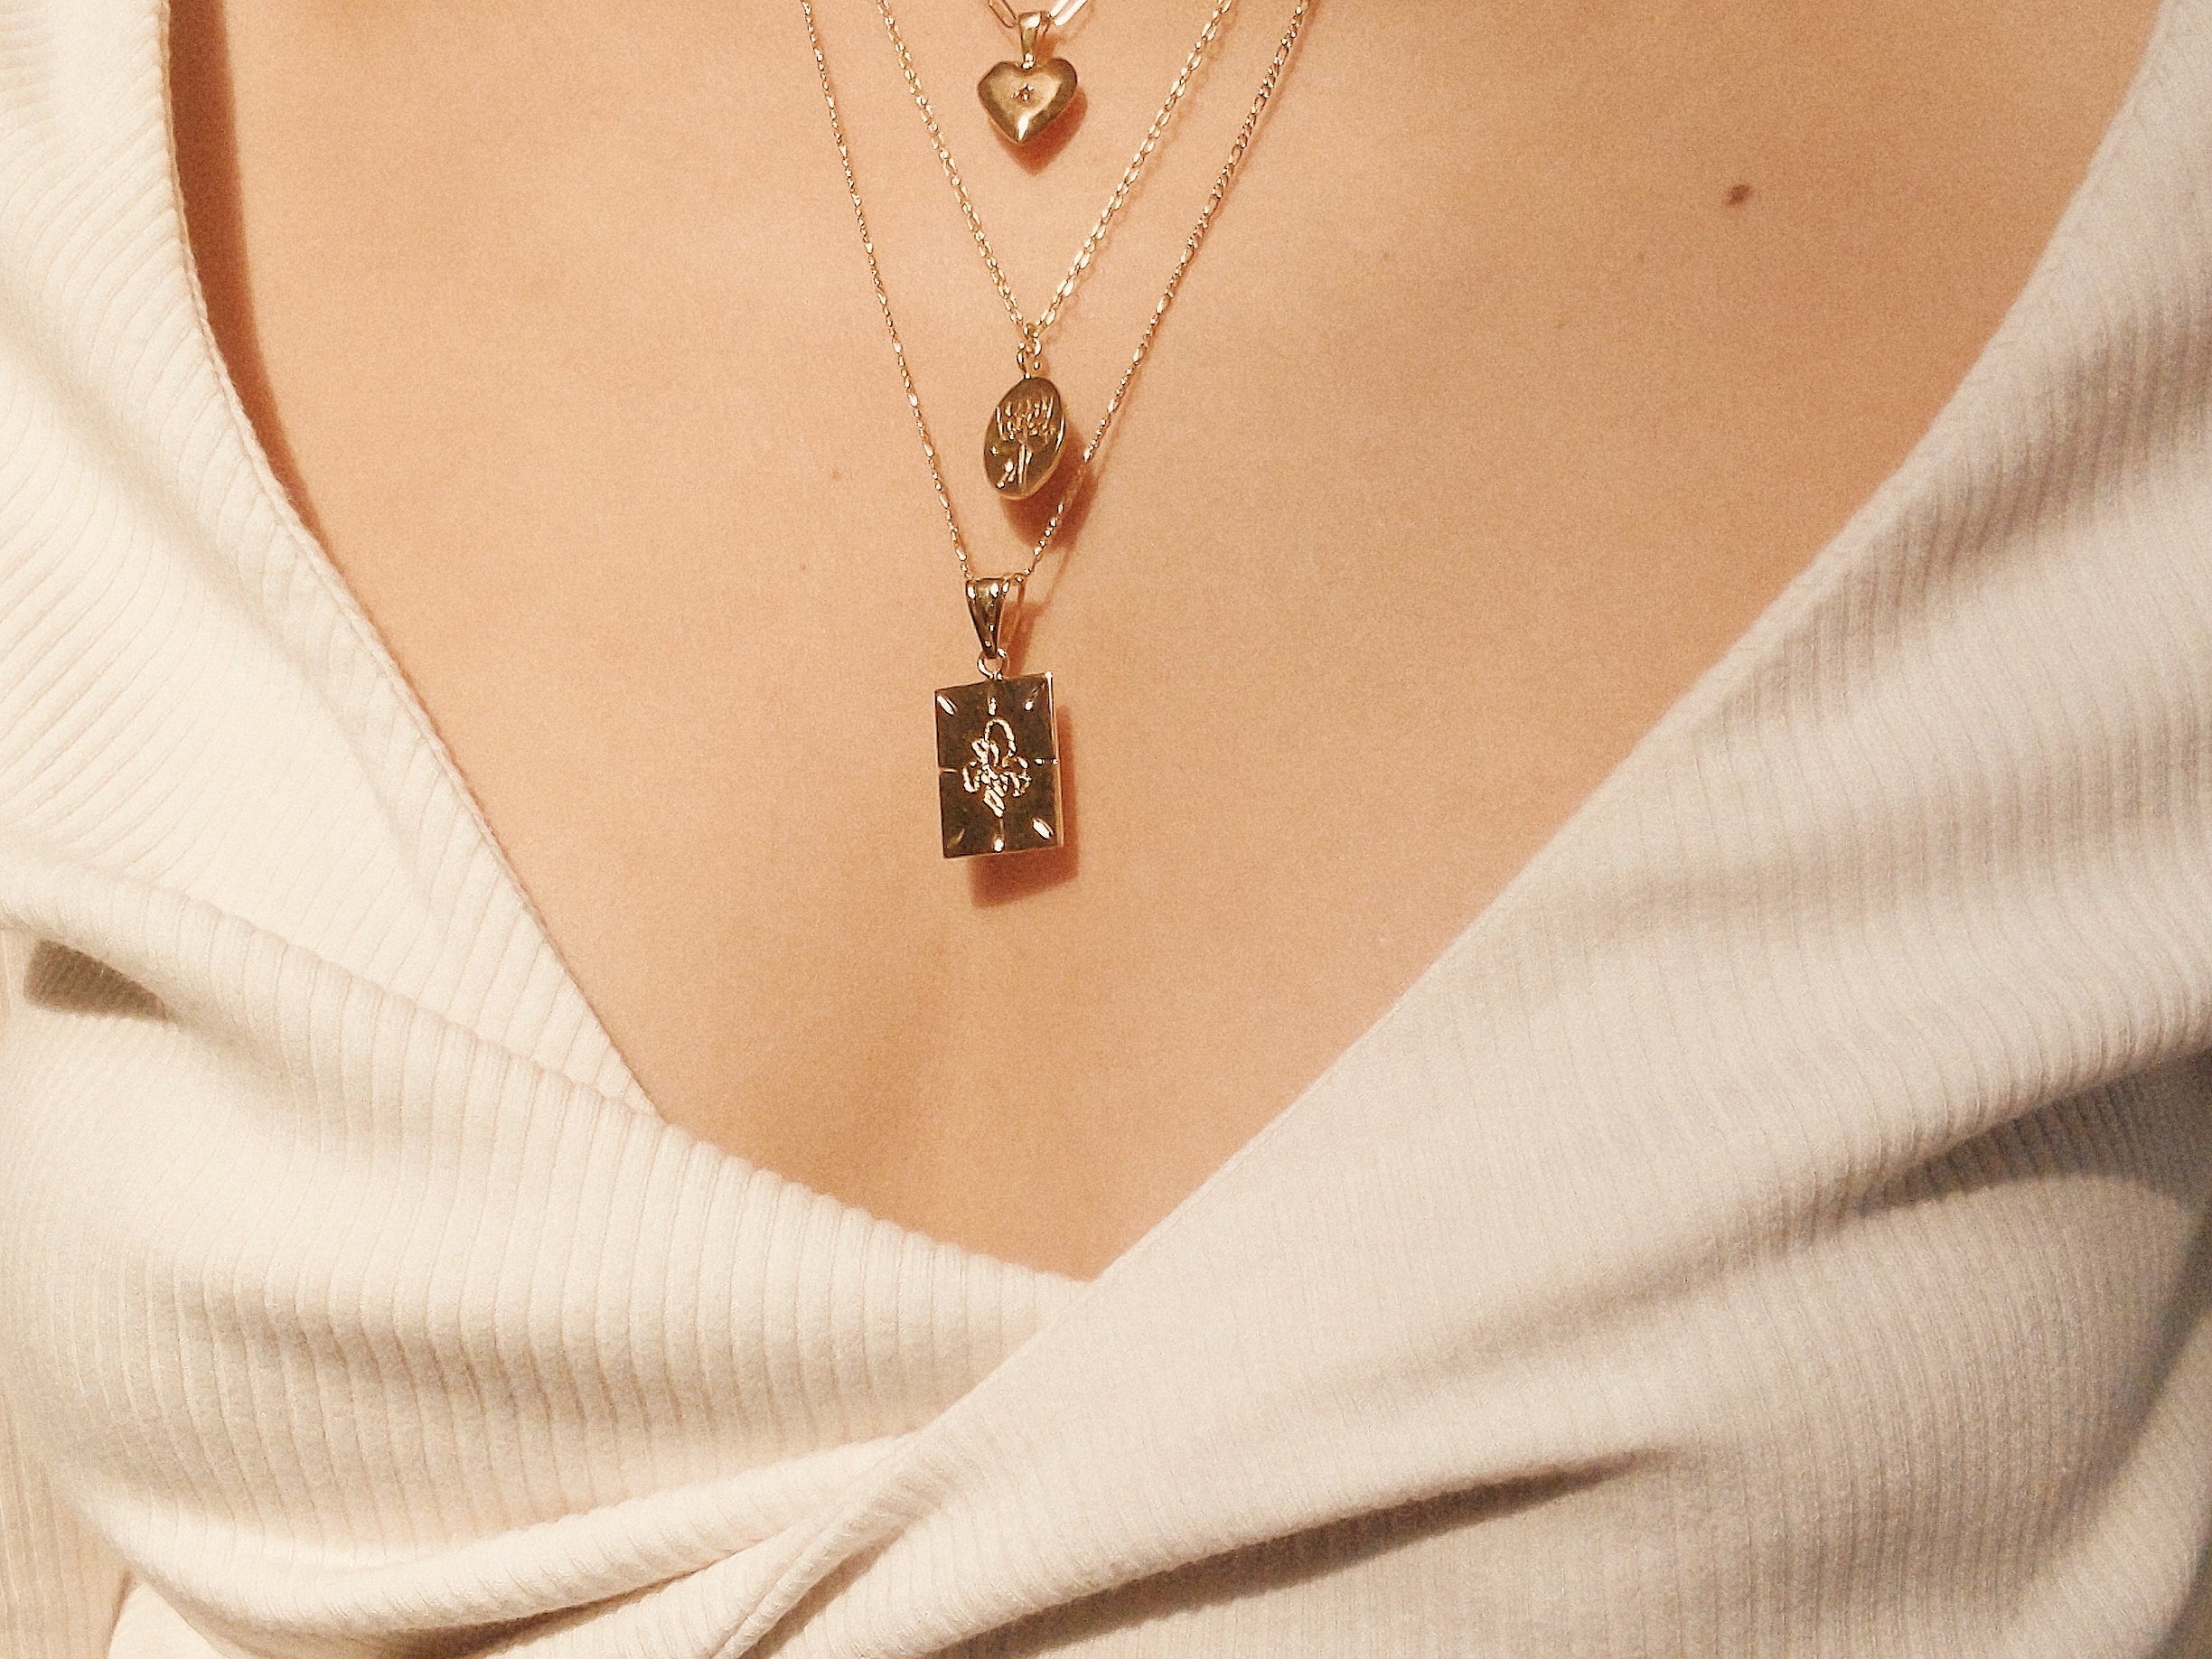 Gilded Heart Pendant Necklace - S-kin Studio Jewelry | Minimal Jewellery That Lasts.